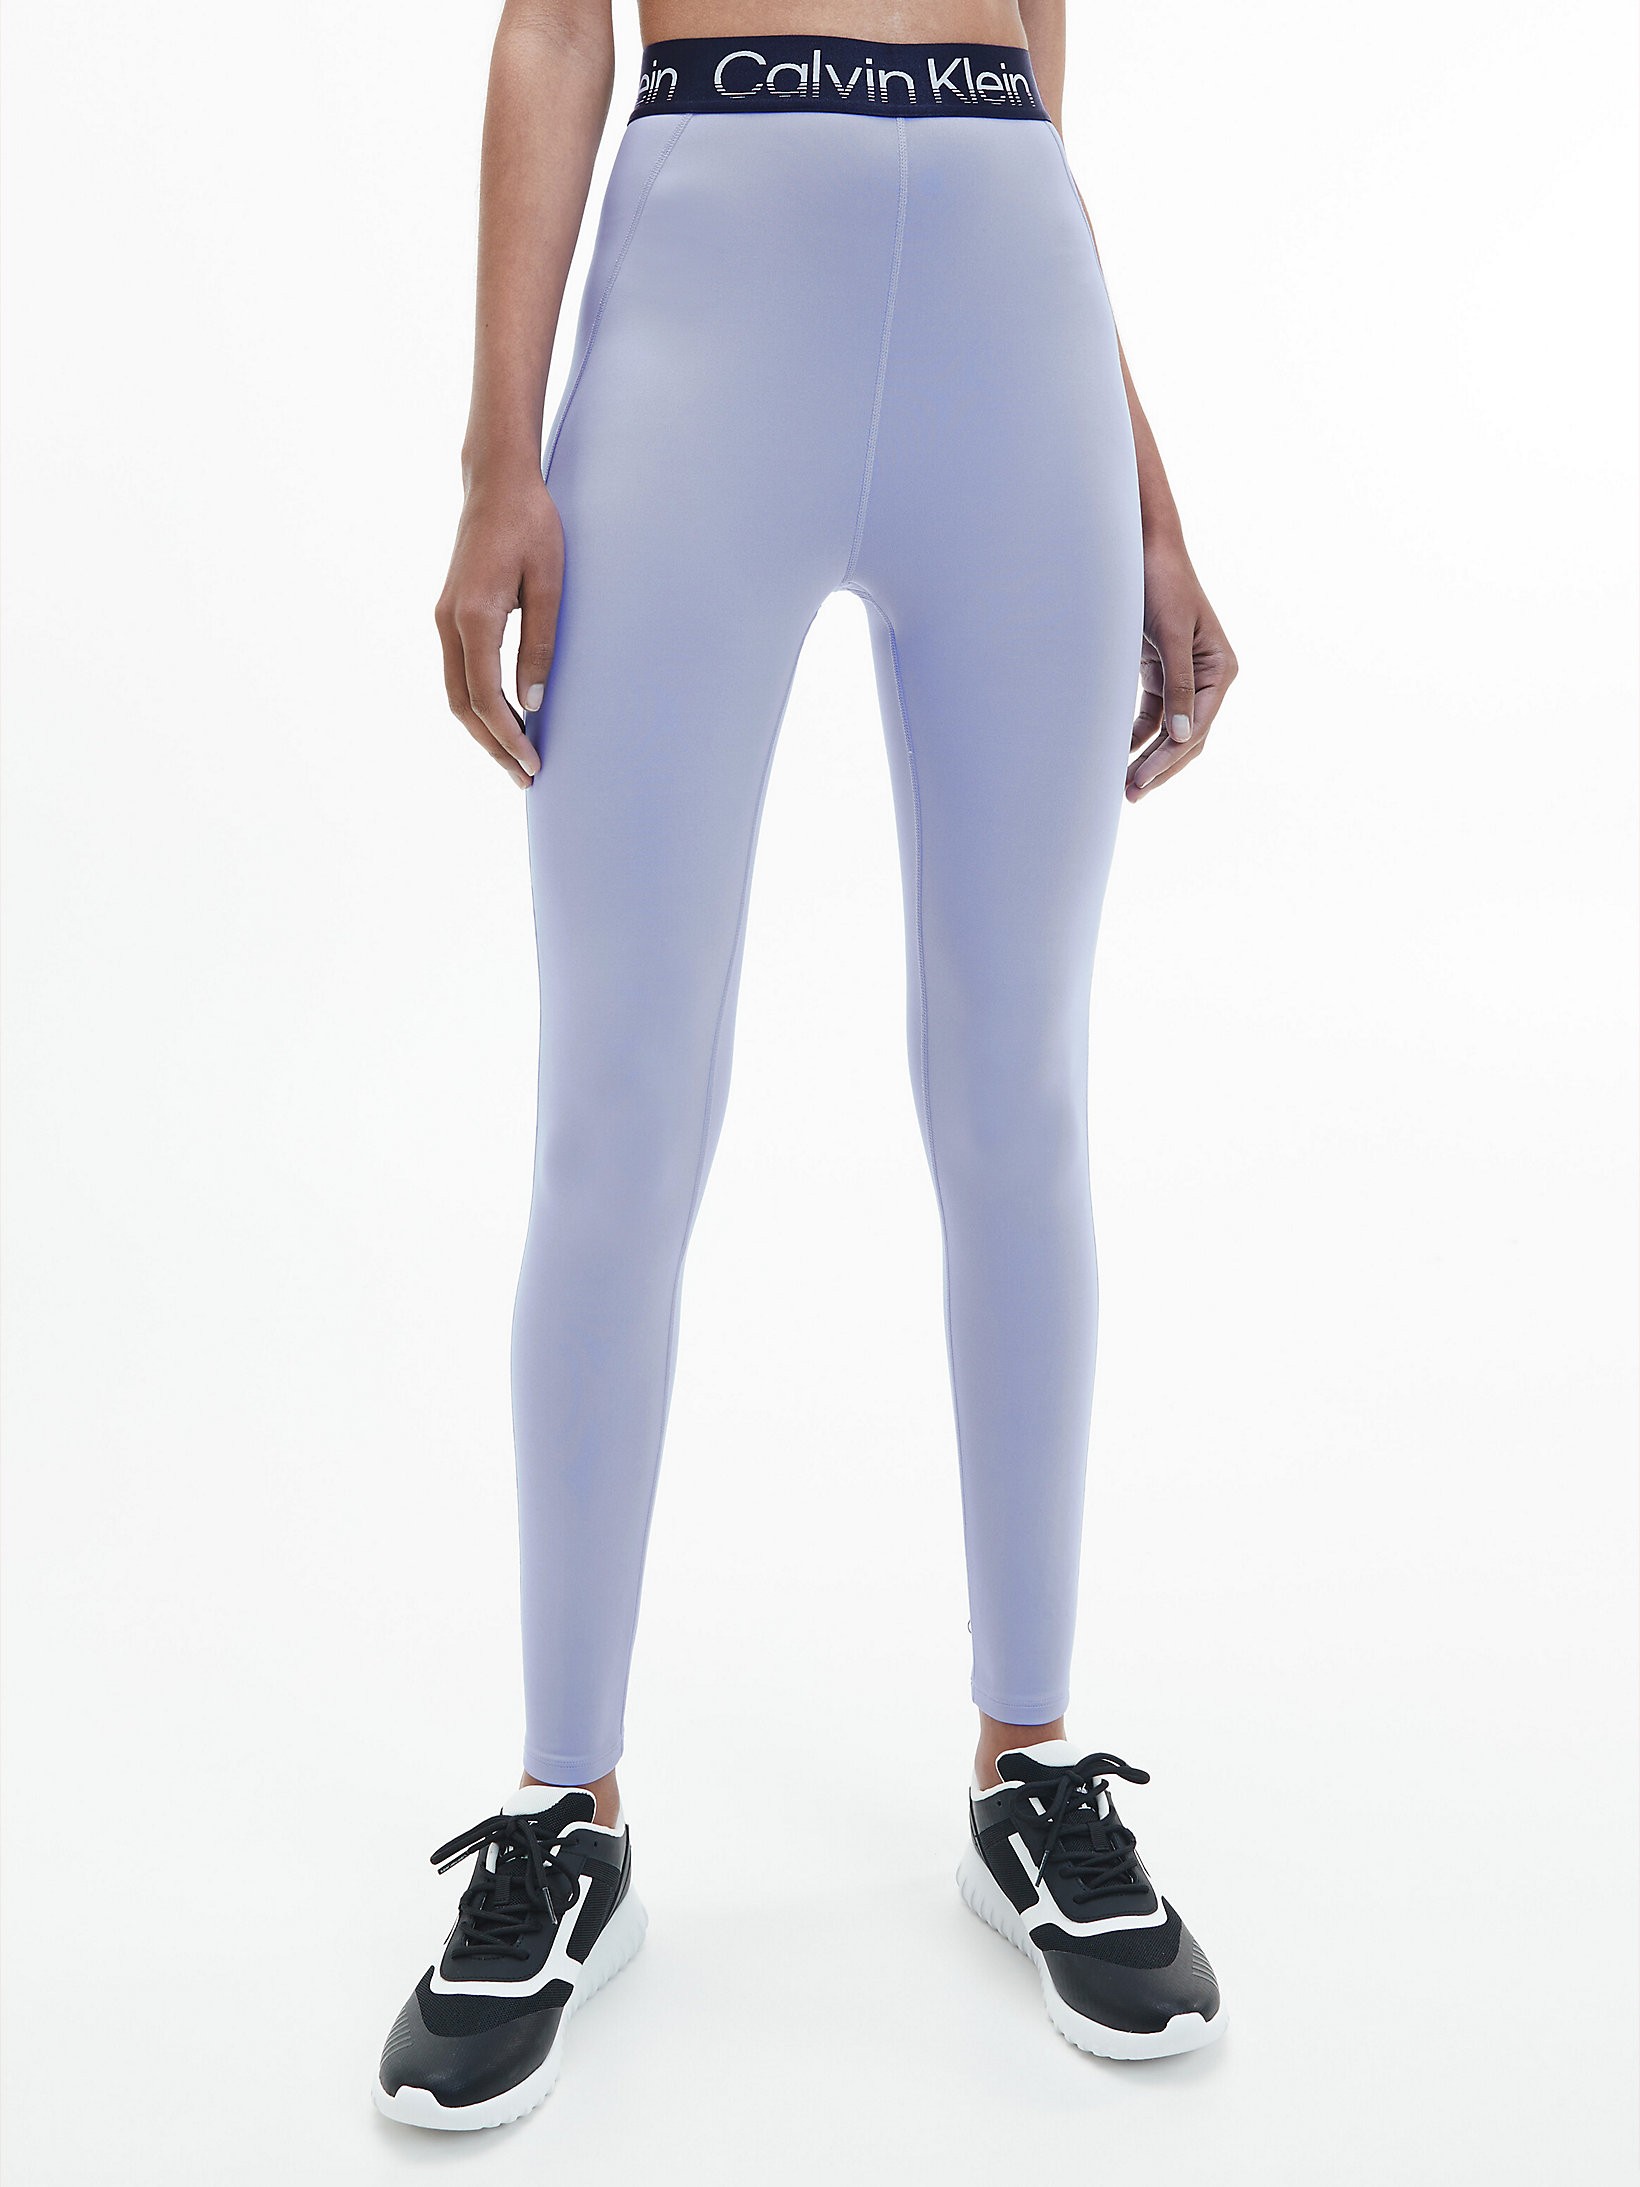 Jacaranda Recycled Polyester 7/8 Gym Leggings undefined women Calvin Klein